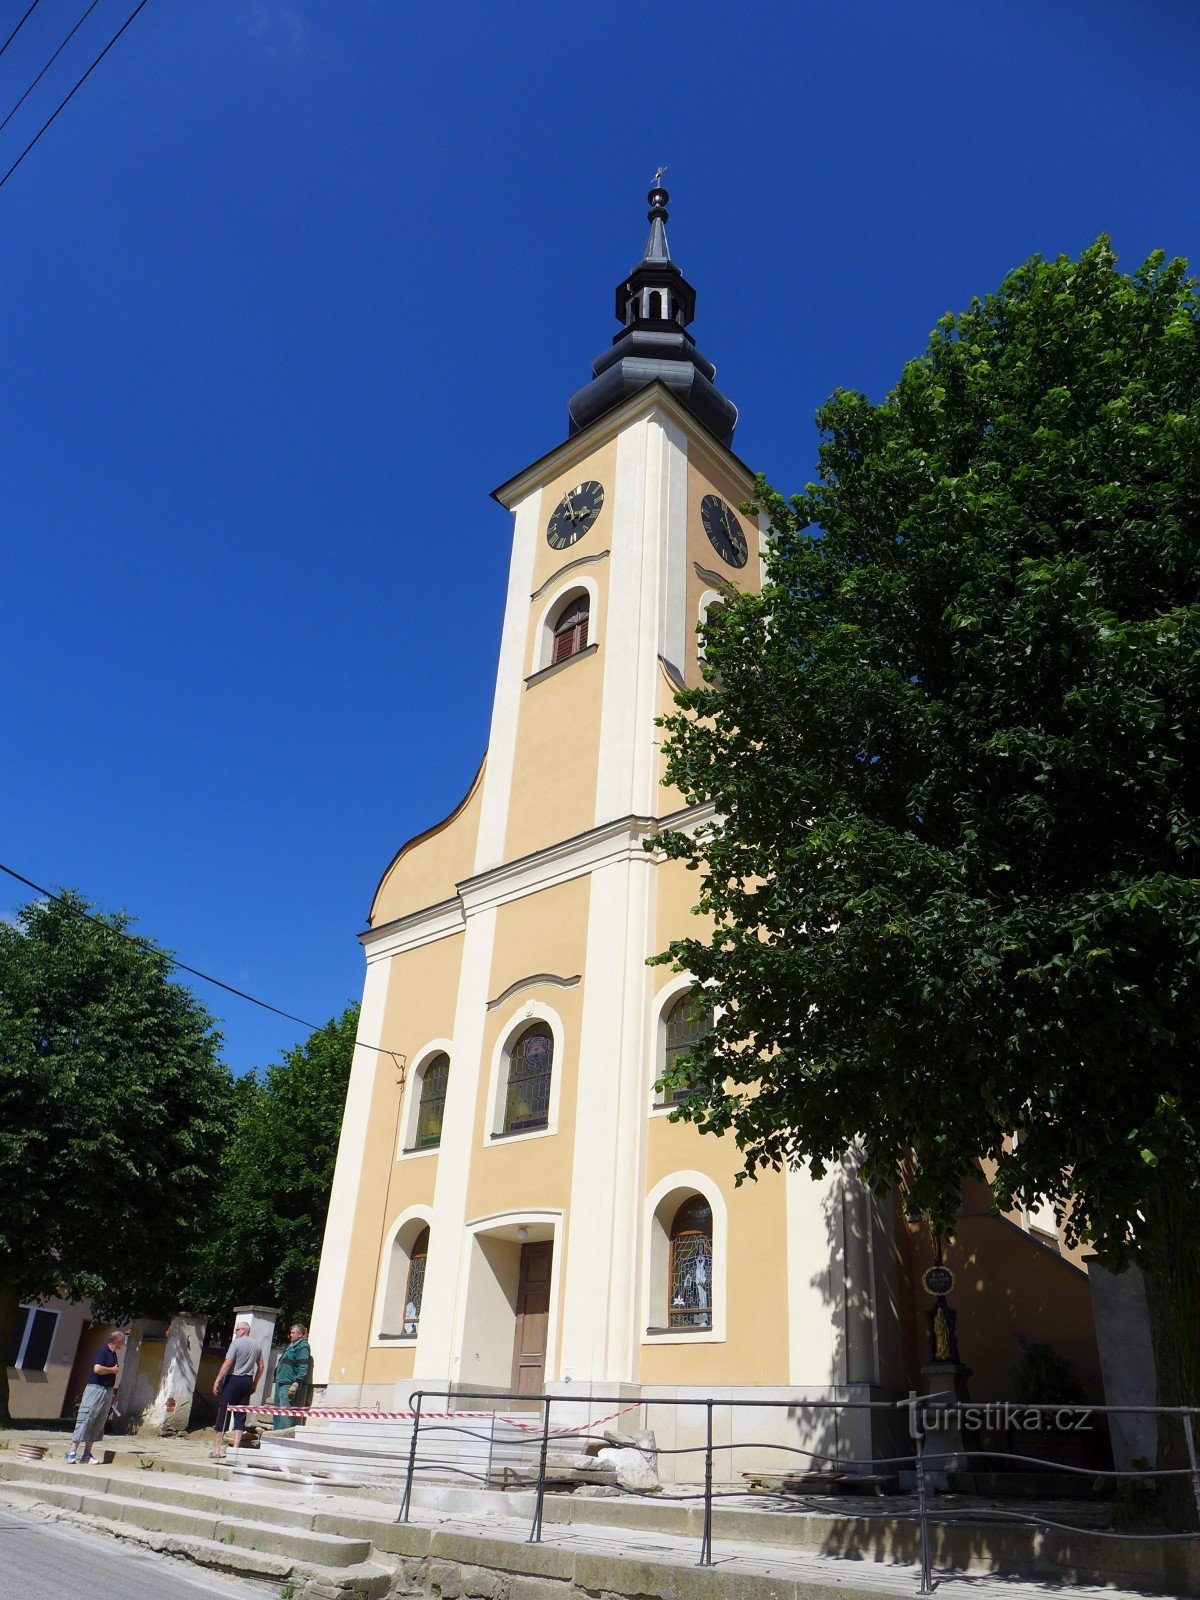 Stará Riše - Biserica Tuturor Sfinților